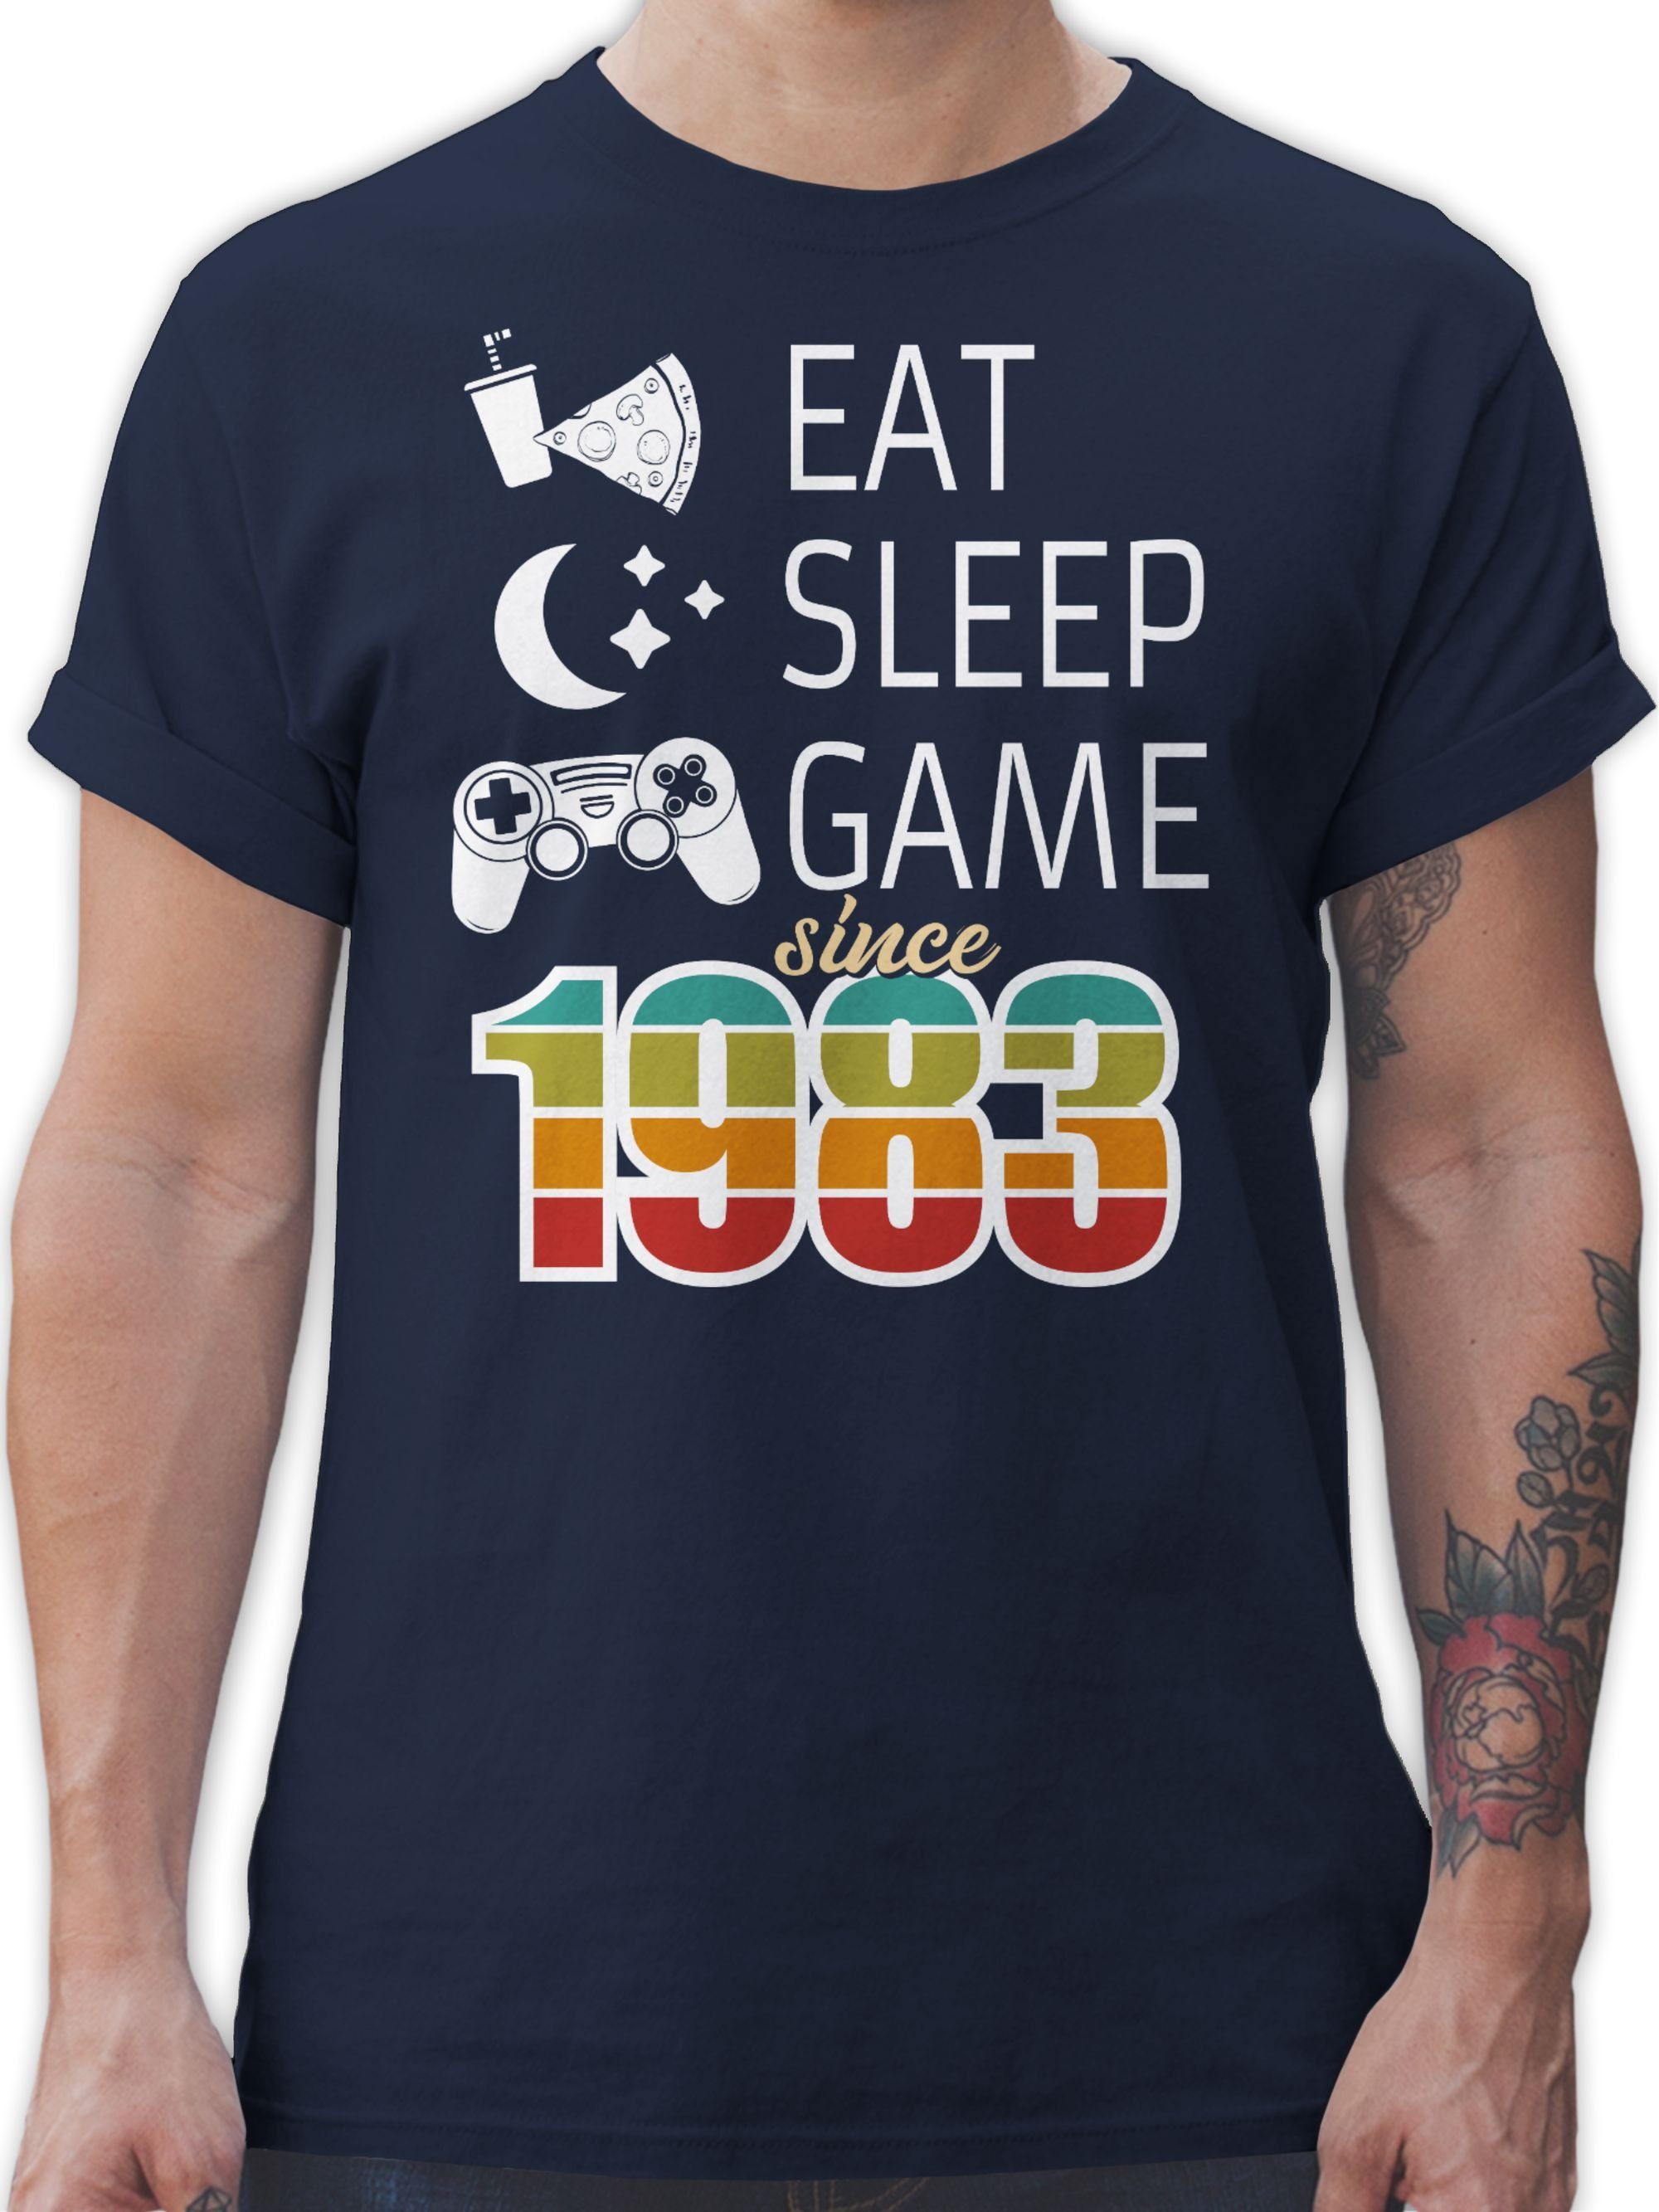 Shirtracer T-Shirt Eat sleep Game since 1983 bunt 40. Geburtstag 02 Navy Blau